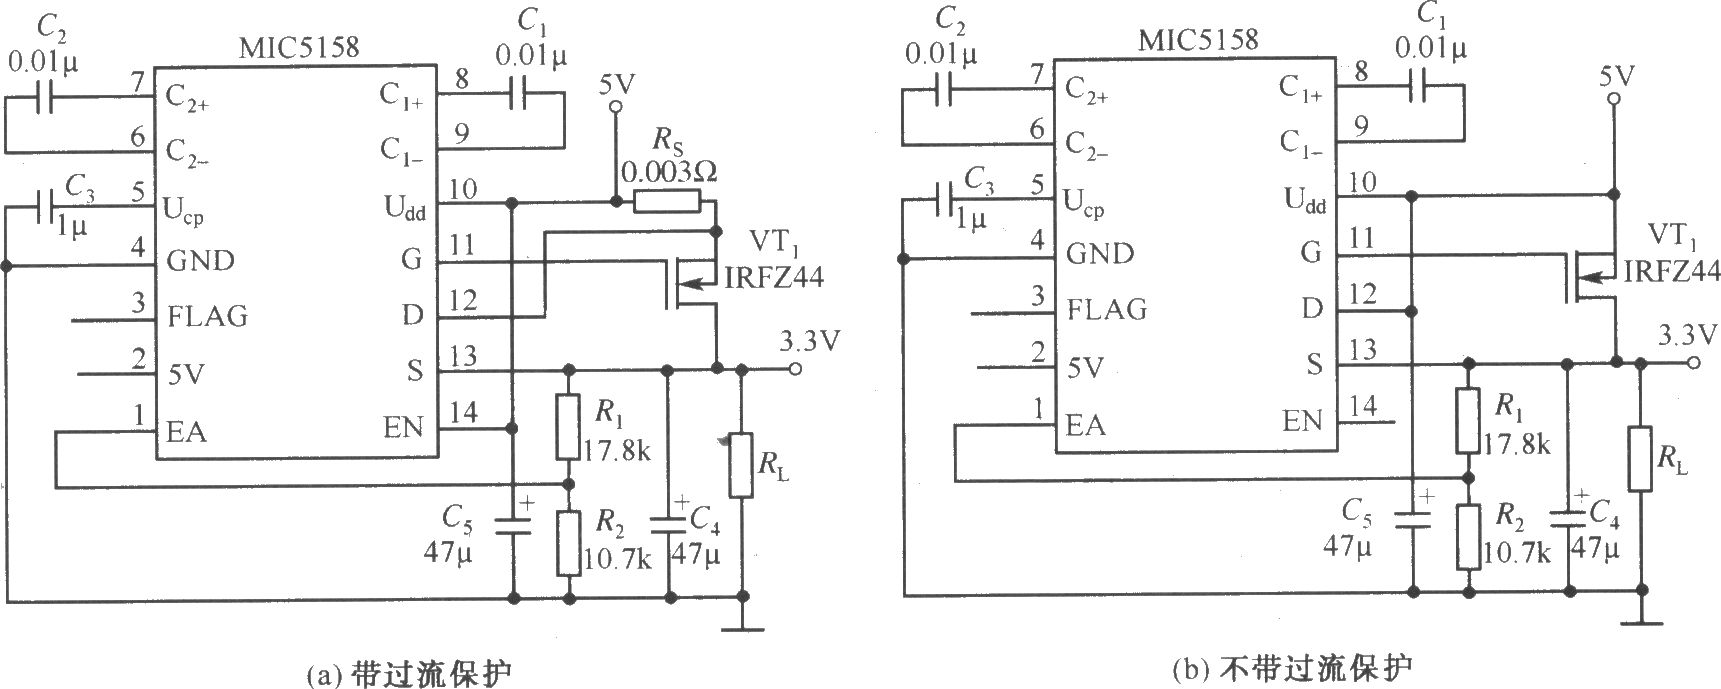 MIC5158构成的外围电路简单的5V输入、3.3V／10A输出